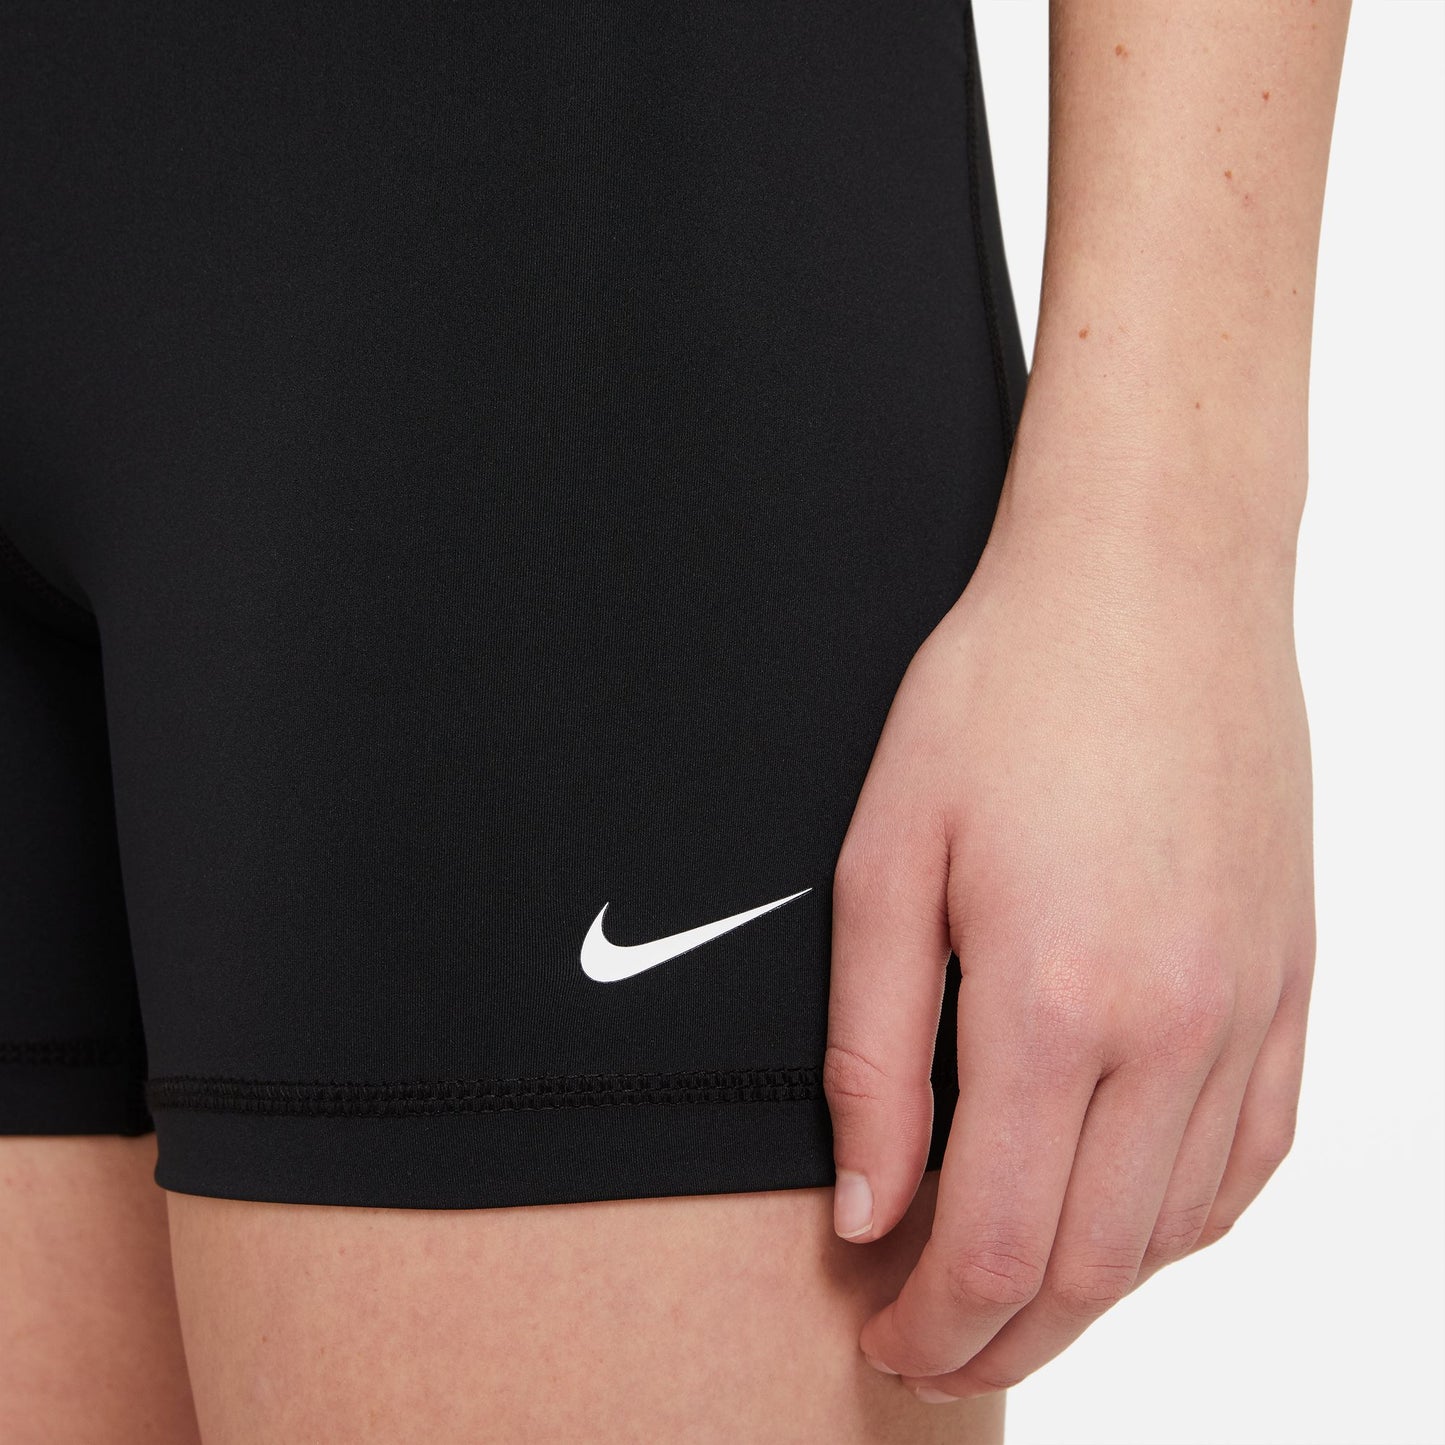 Pantalón corto Nike Pro 365 de 5" para mujer